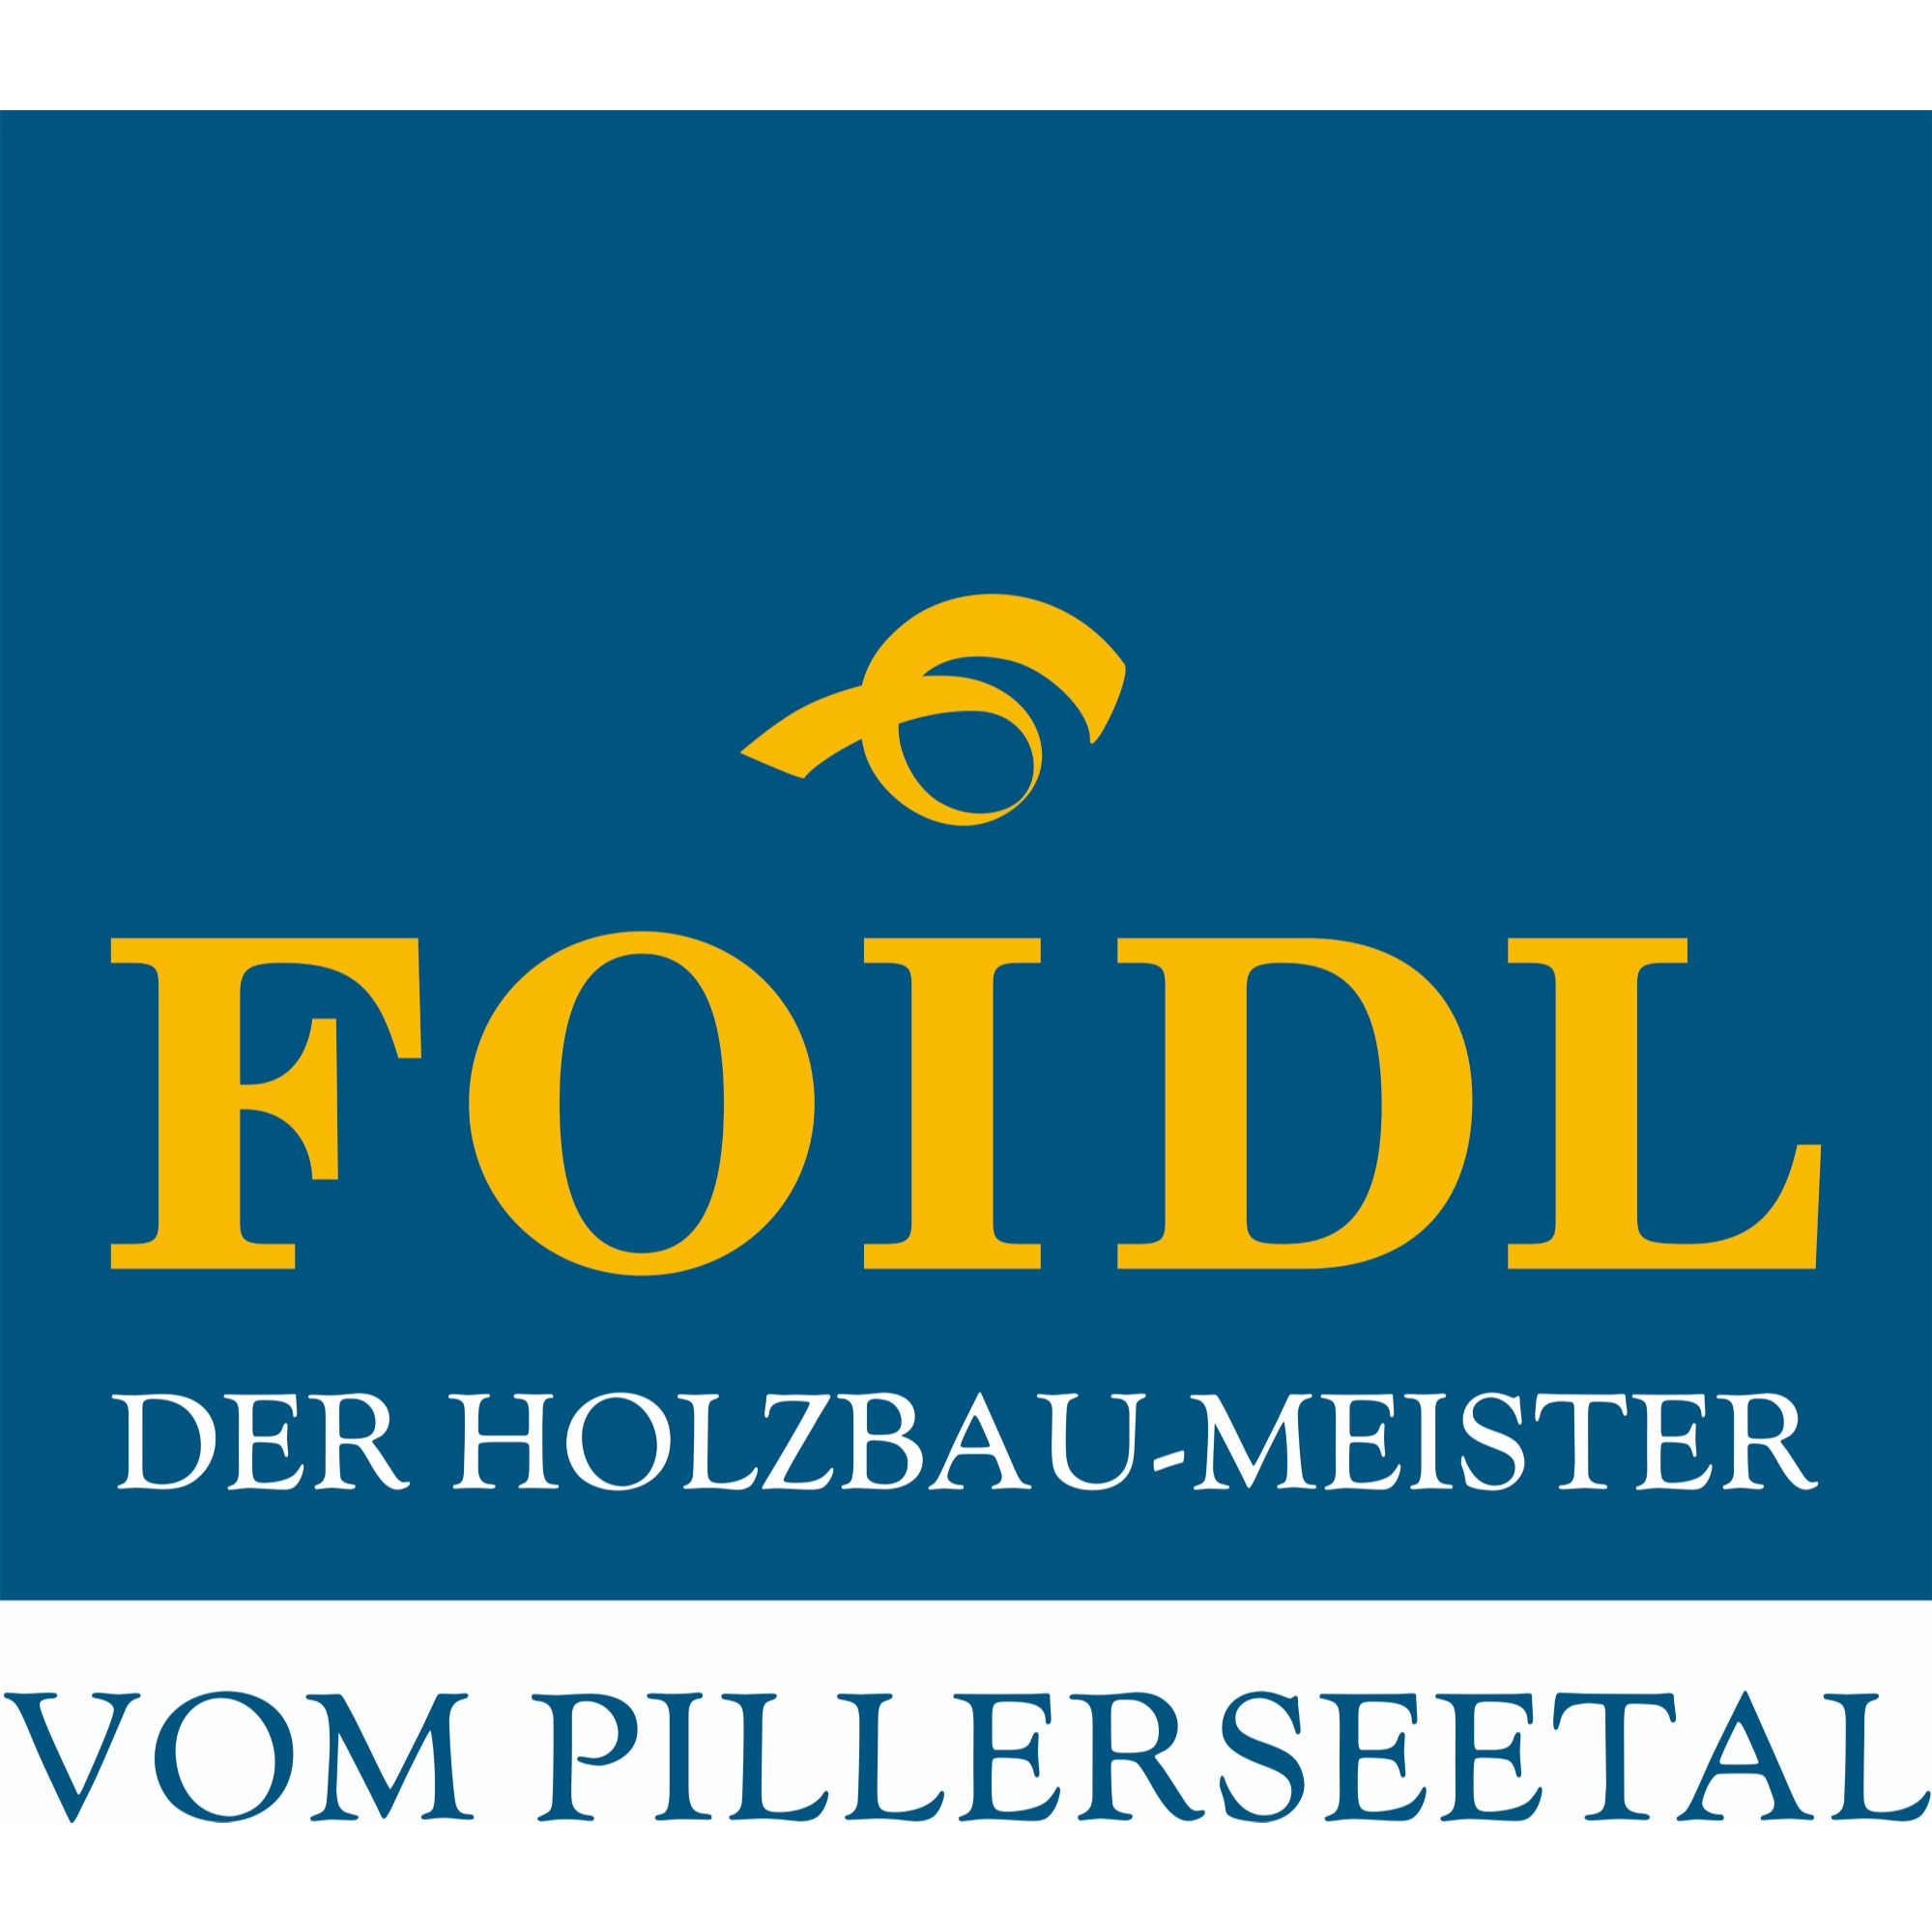 Holzbau Foidl Josef GmbH & Co KG Logo